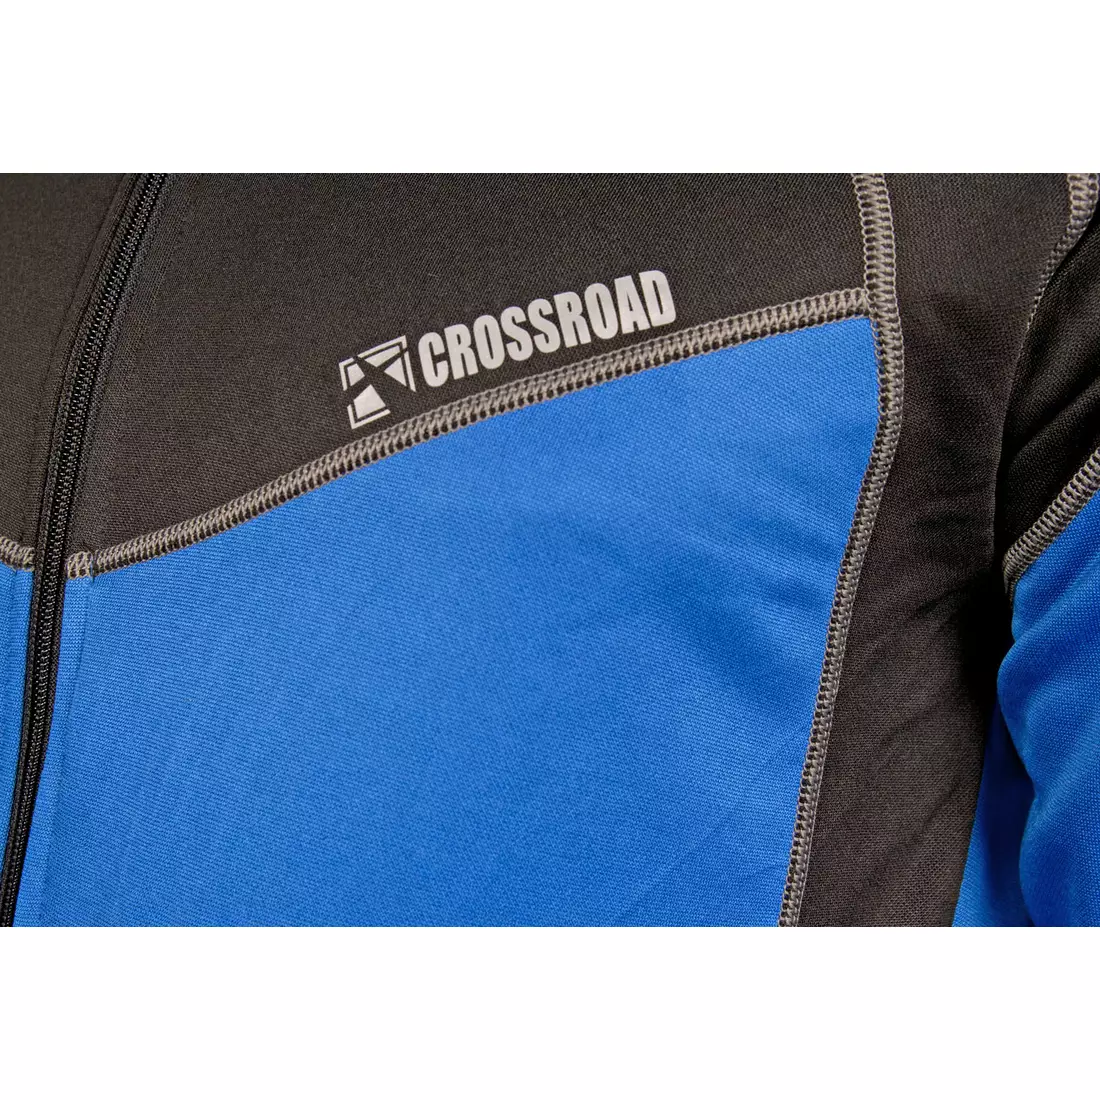 CROSSROAD KENT warm cycling sweatshirt, black and blue